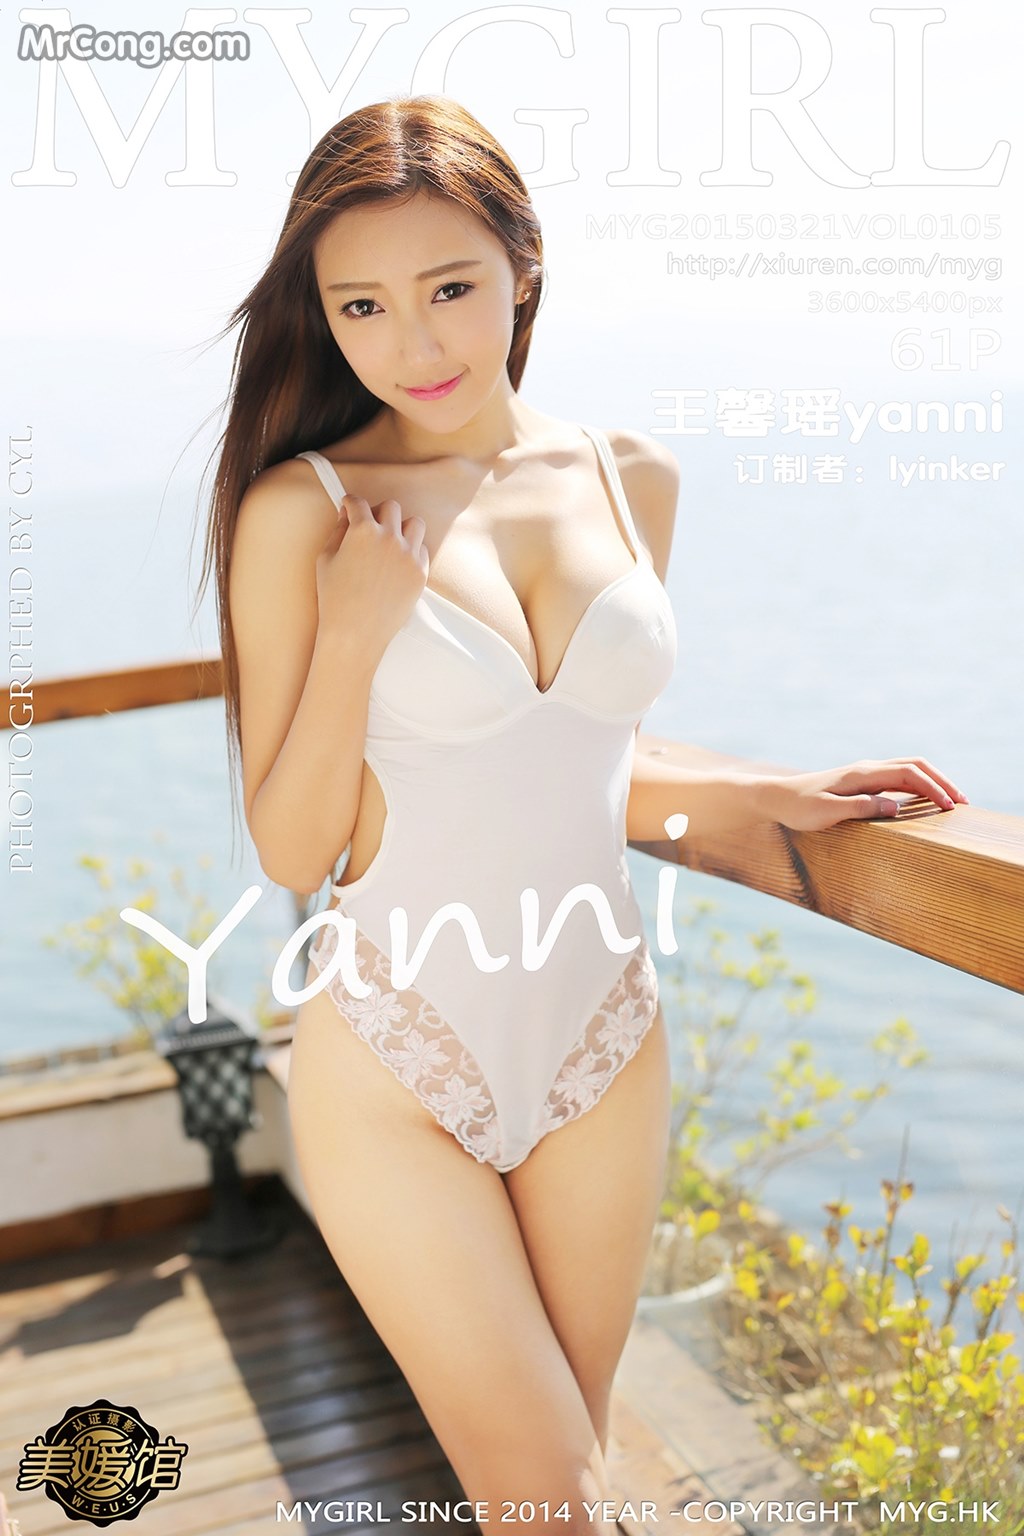 MyGirl Vol.105: Model Yanni (王馨瑶) (62 pictures)